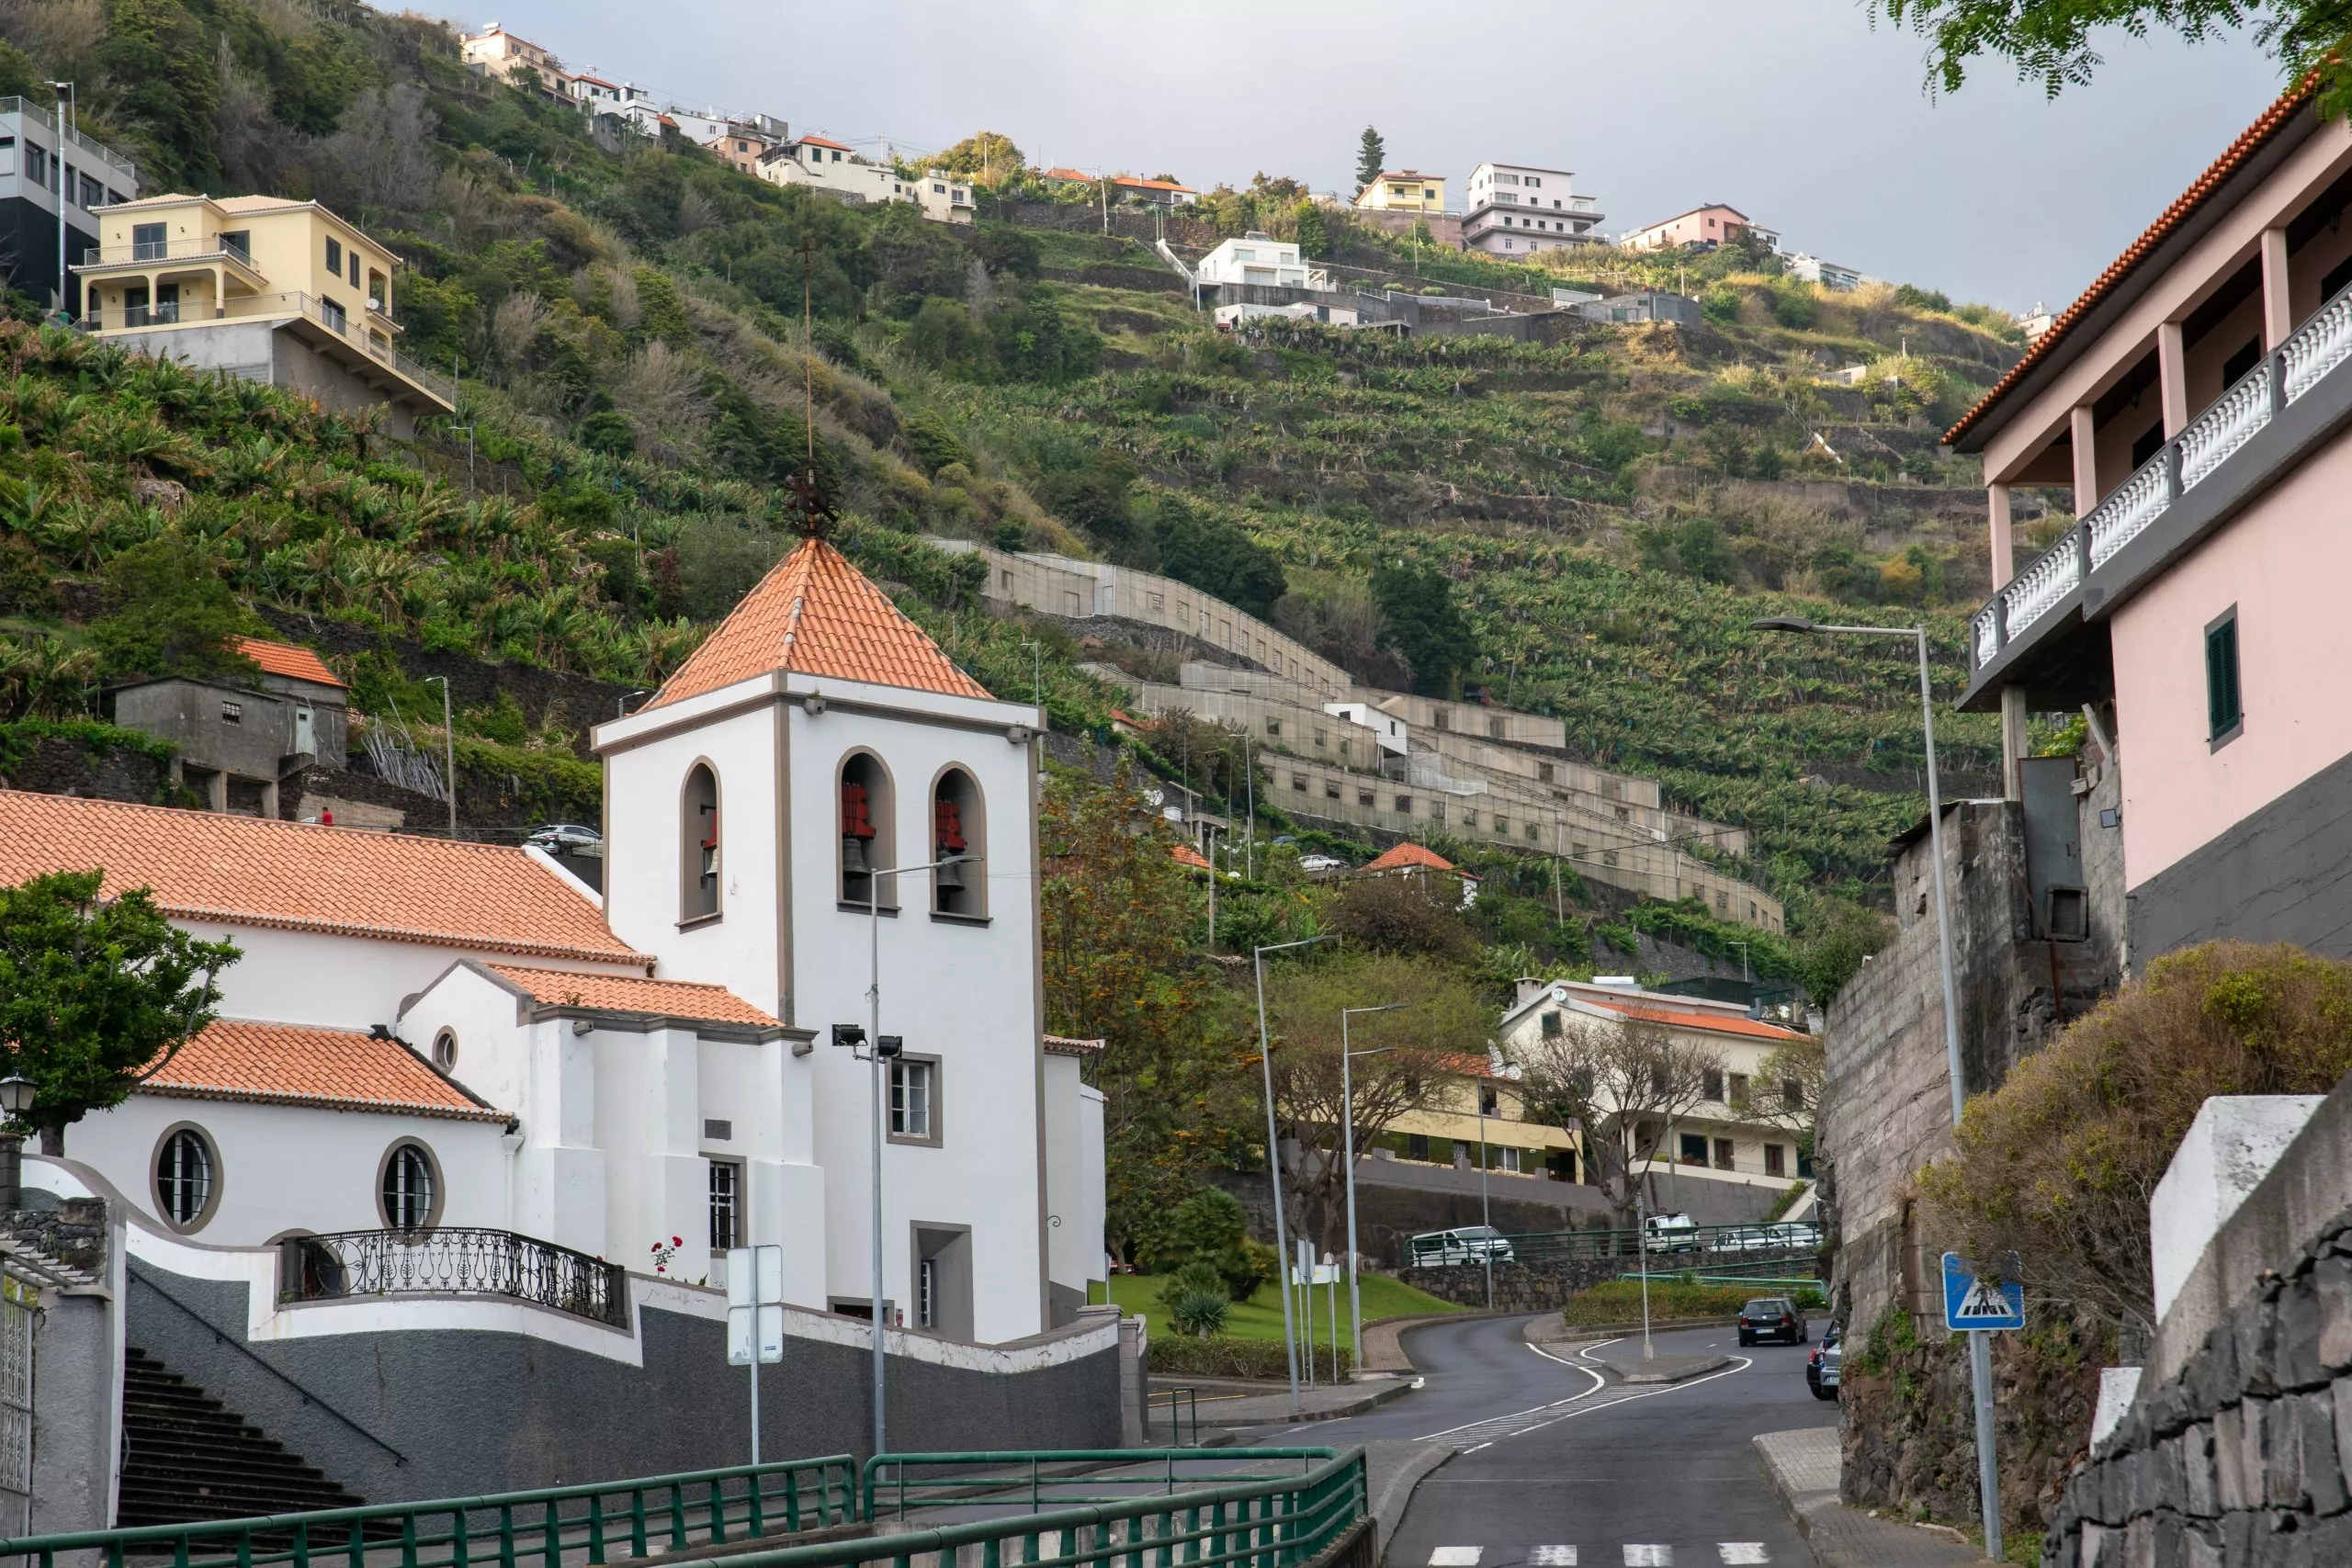 Houses and tropical nature with mountains in Estreito da Calheta